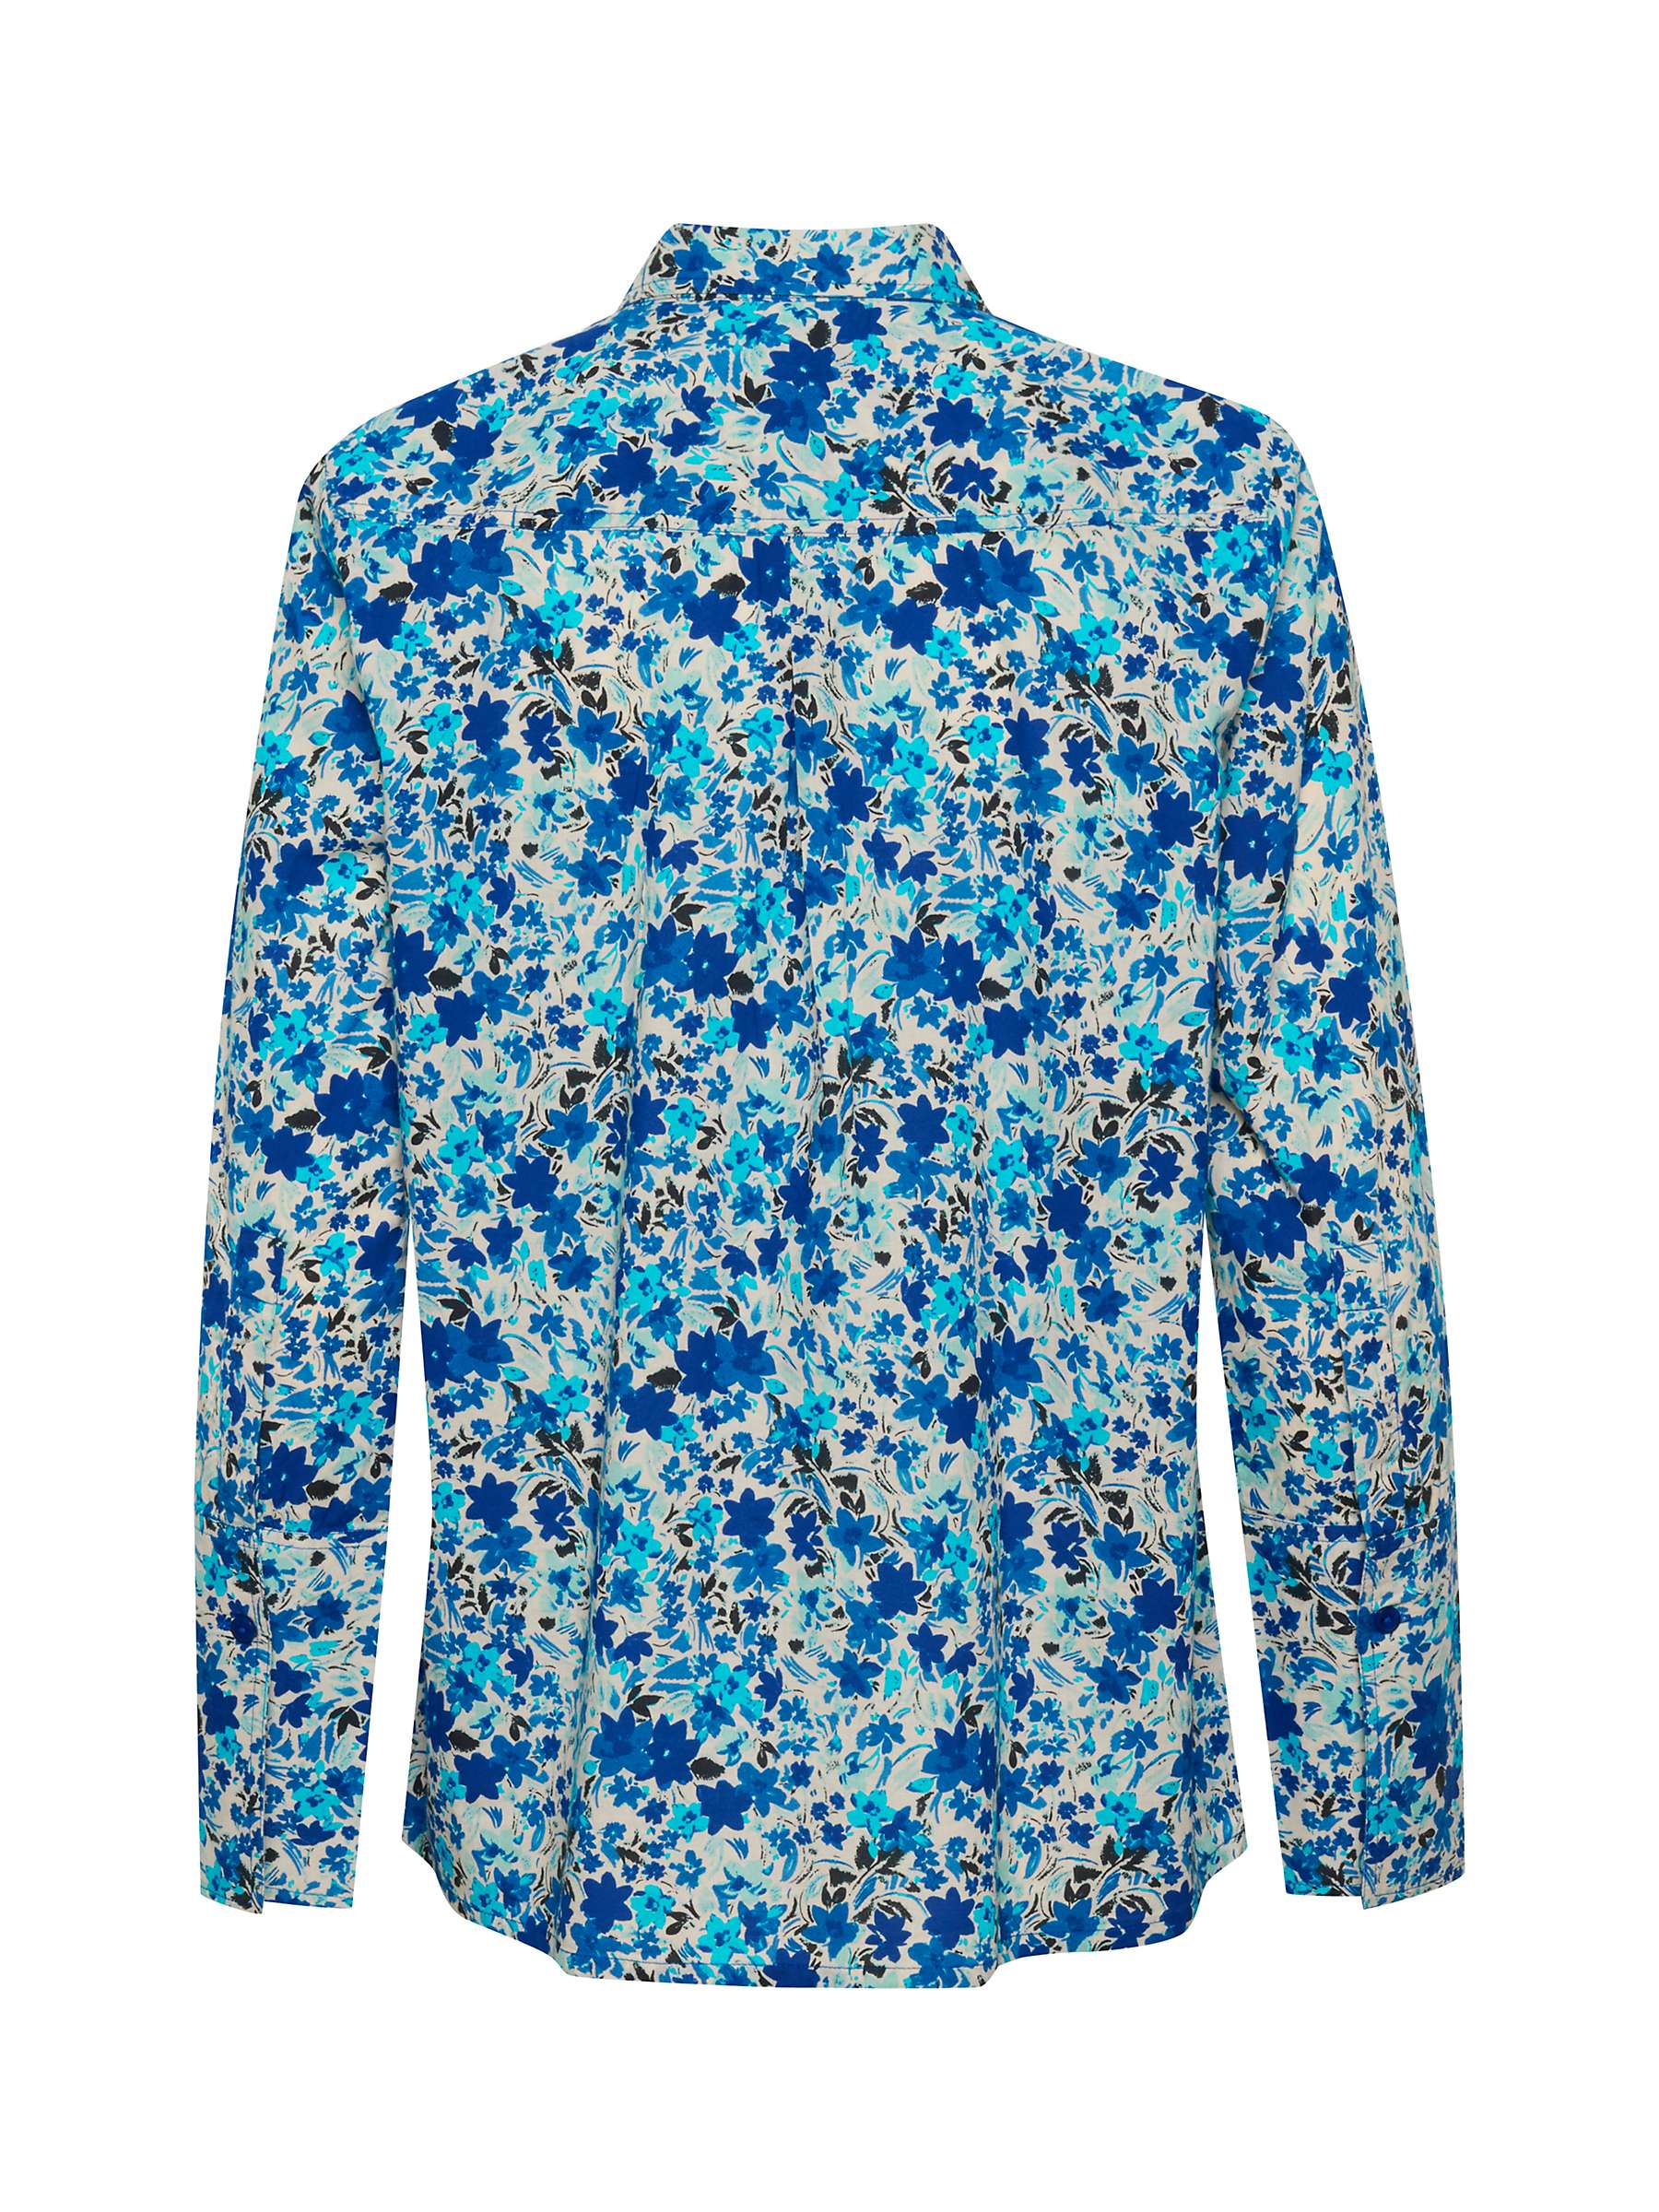 Buy Part Two Sabella Cotton Floral Shirt, Blue Online at johnlewis.com